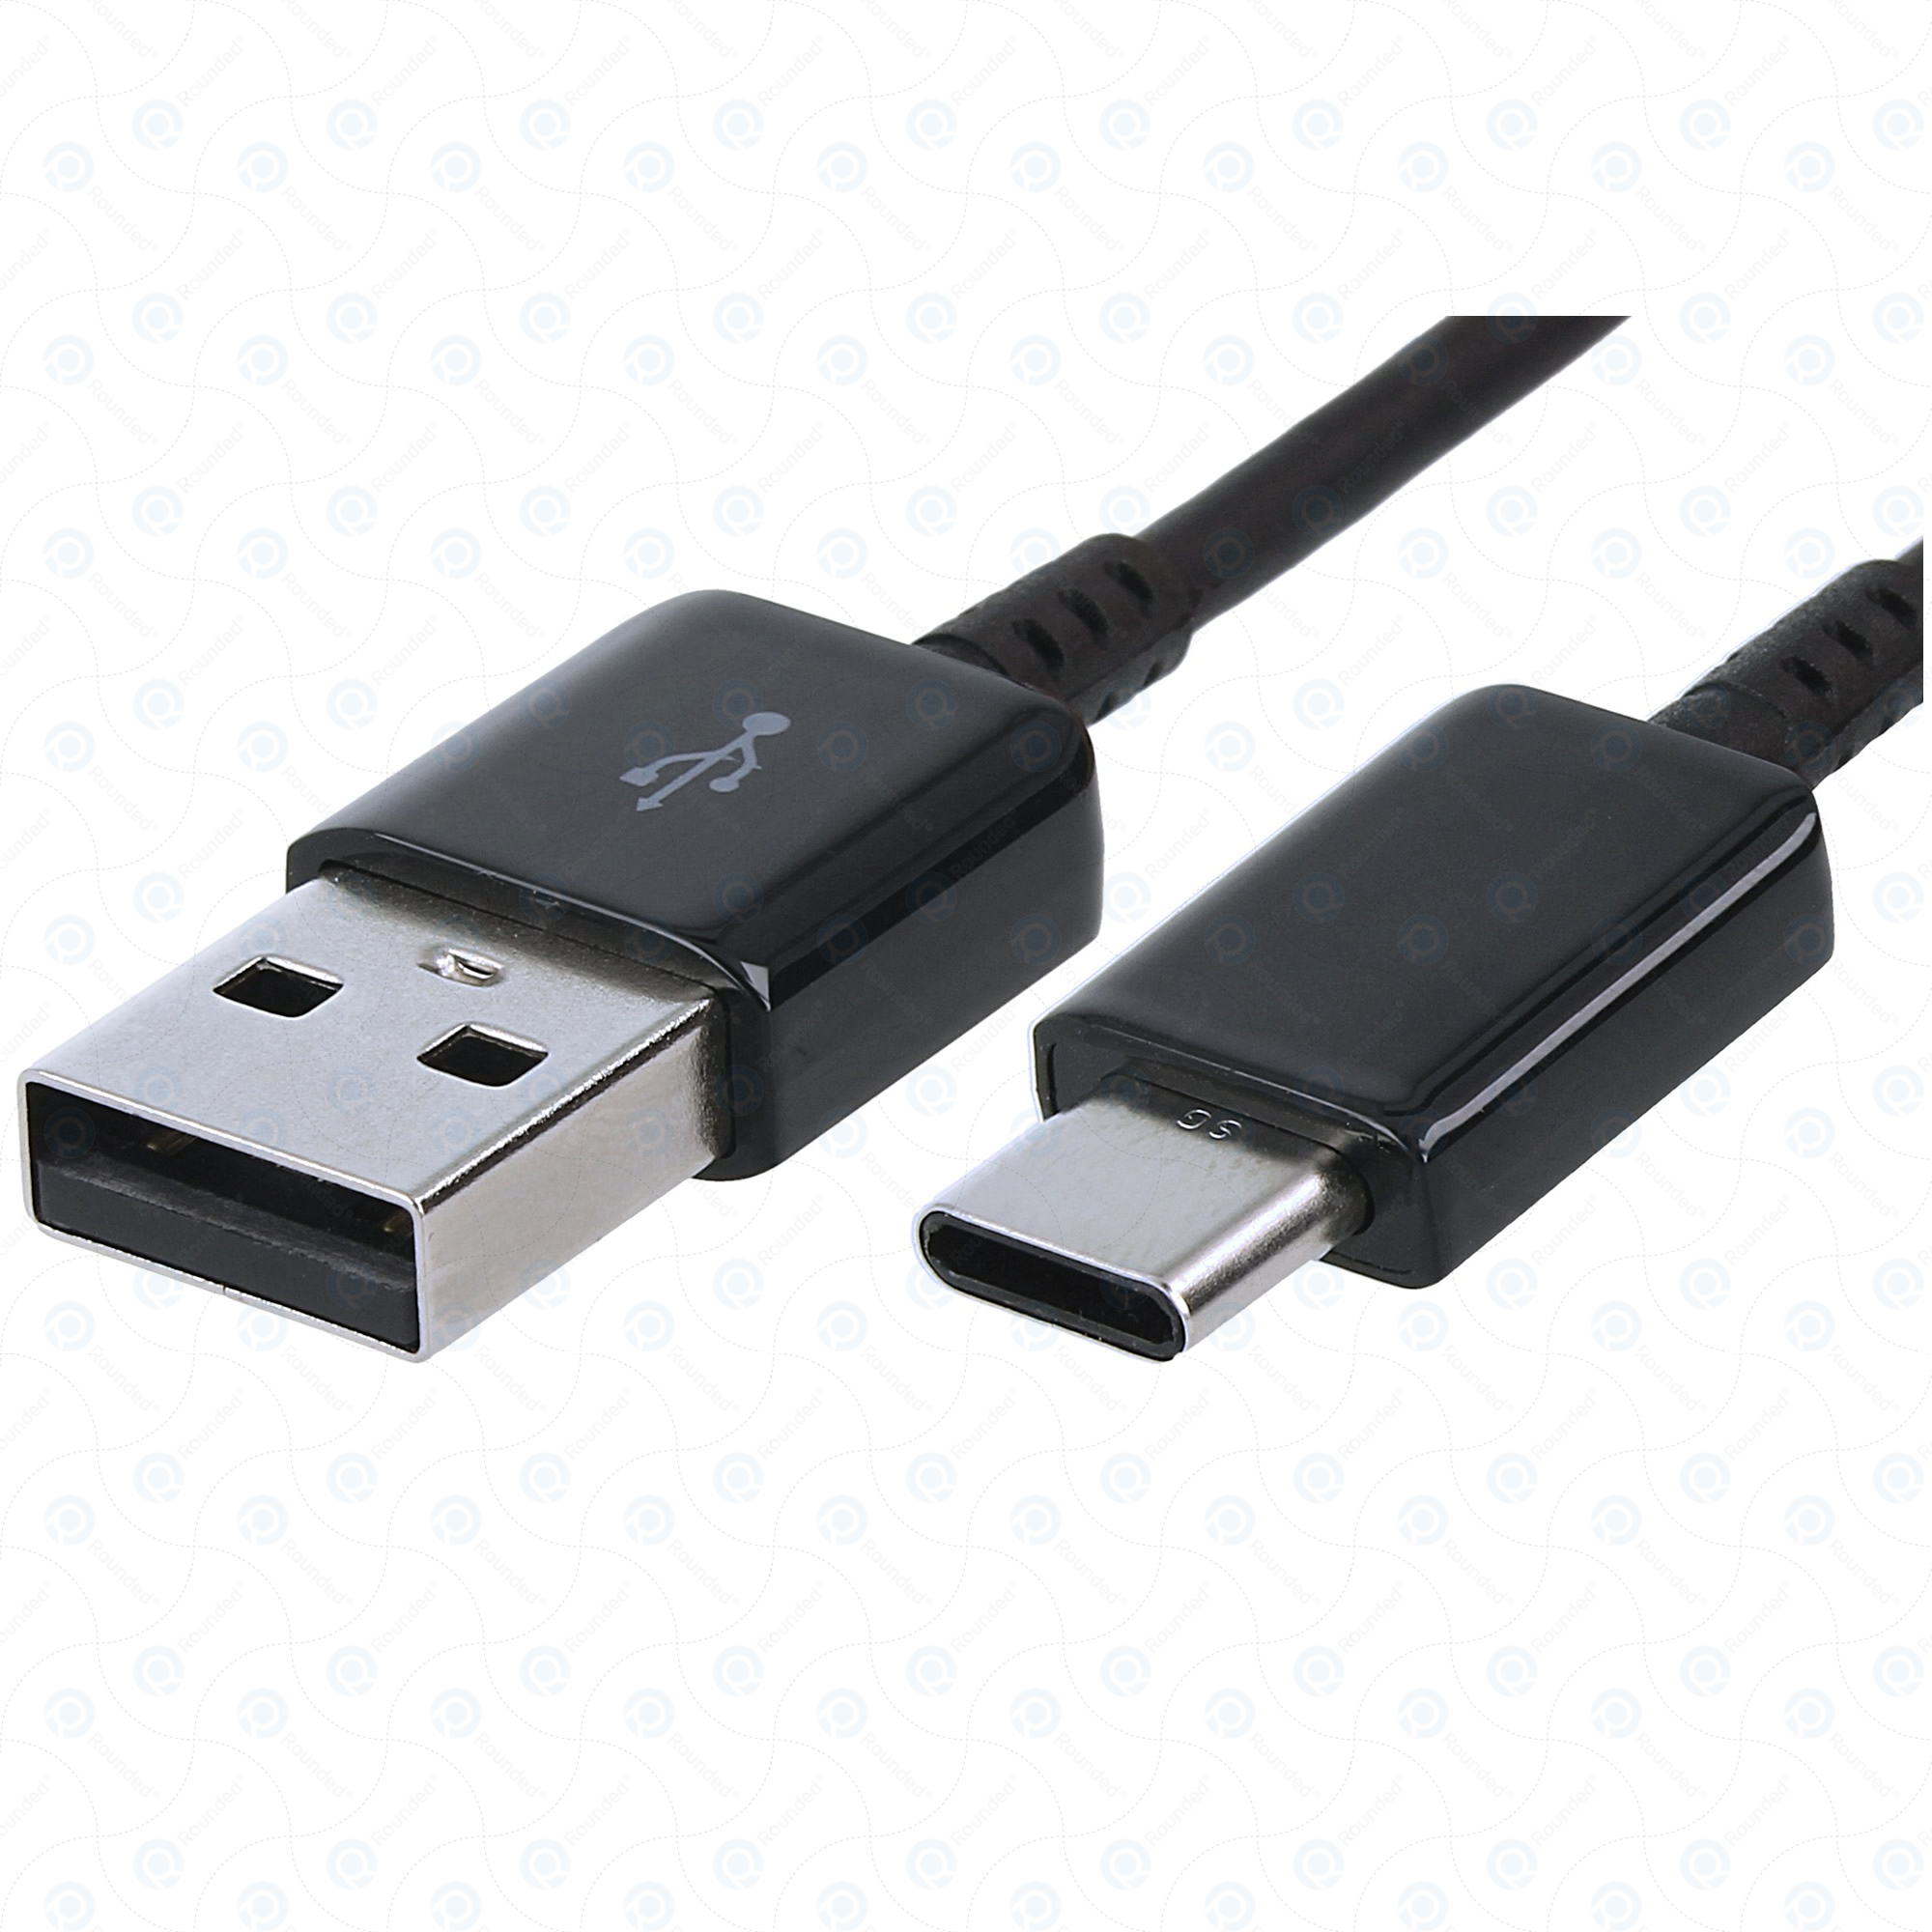 Samsung Samsung USB data cable type-C 3.1 EP-DG950CBE 1.2 meter black .